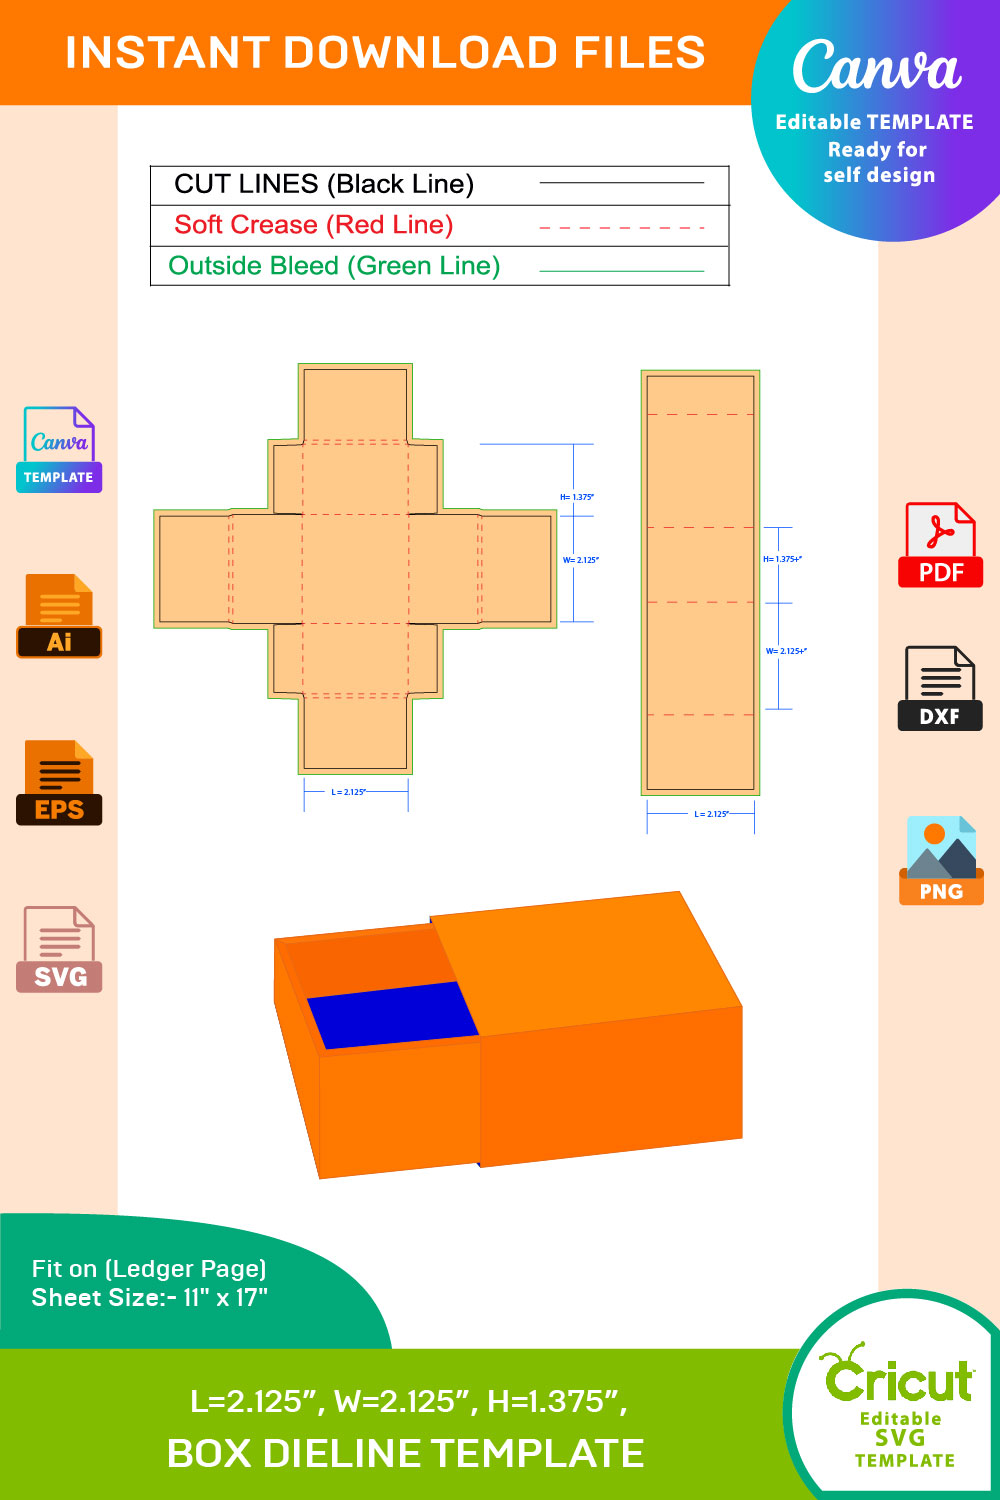 Wood Match Box, Dieline Template, SVG, EPS, PDF, DXF, Ai, PNG, JPEG pinterest preview image.